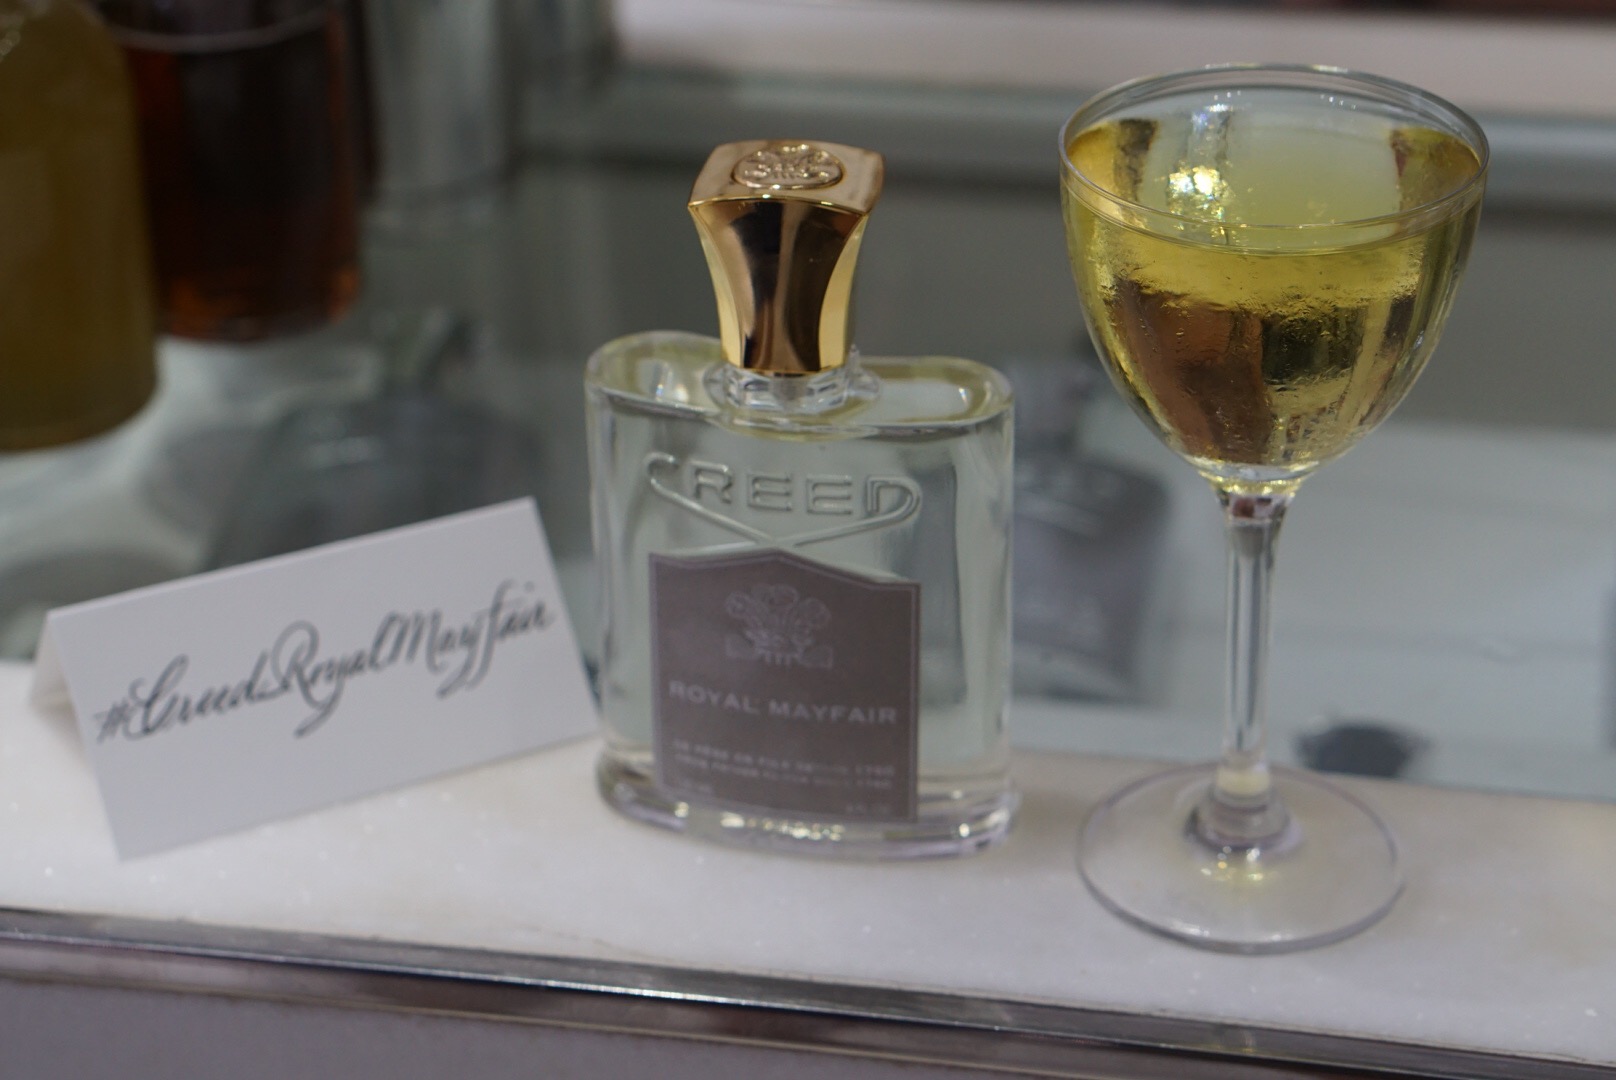 Creed Royal Mayfair fragrance